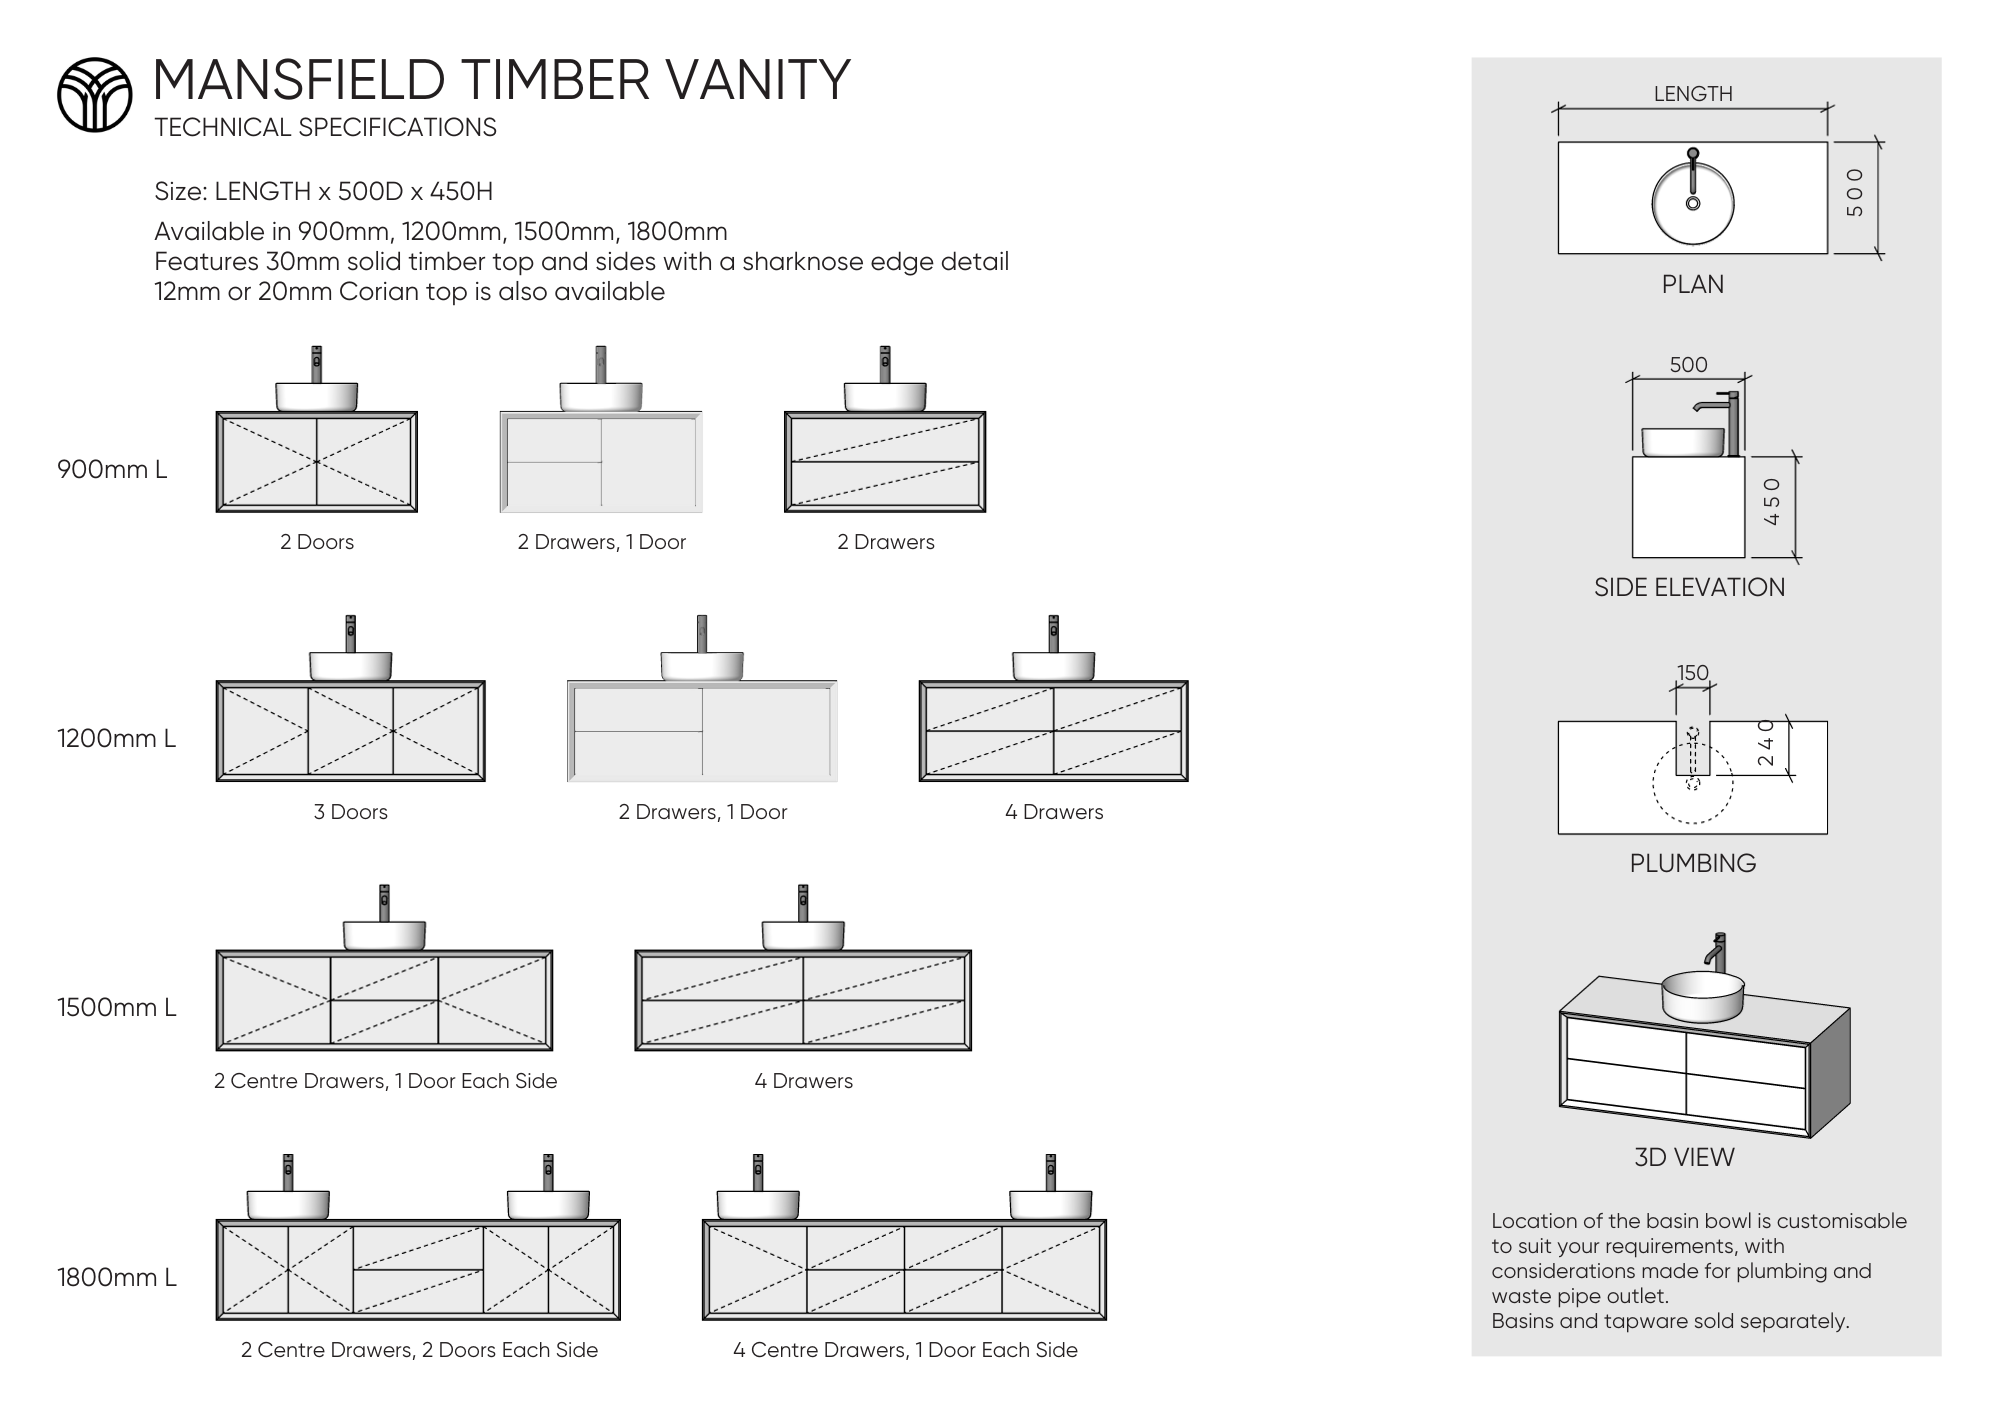 Mansfield Timber Vanity